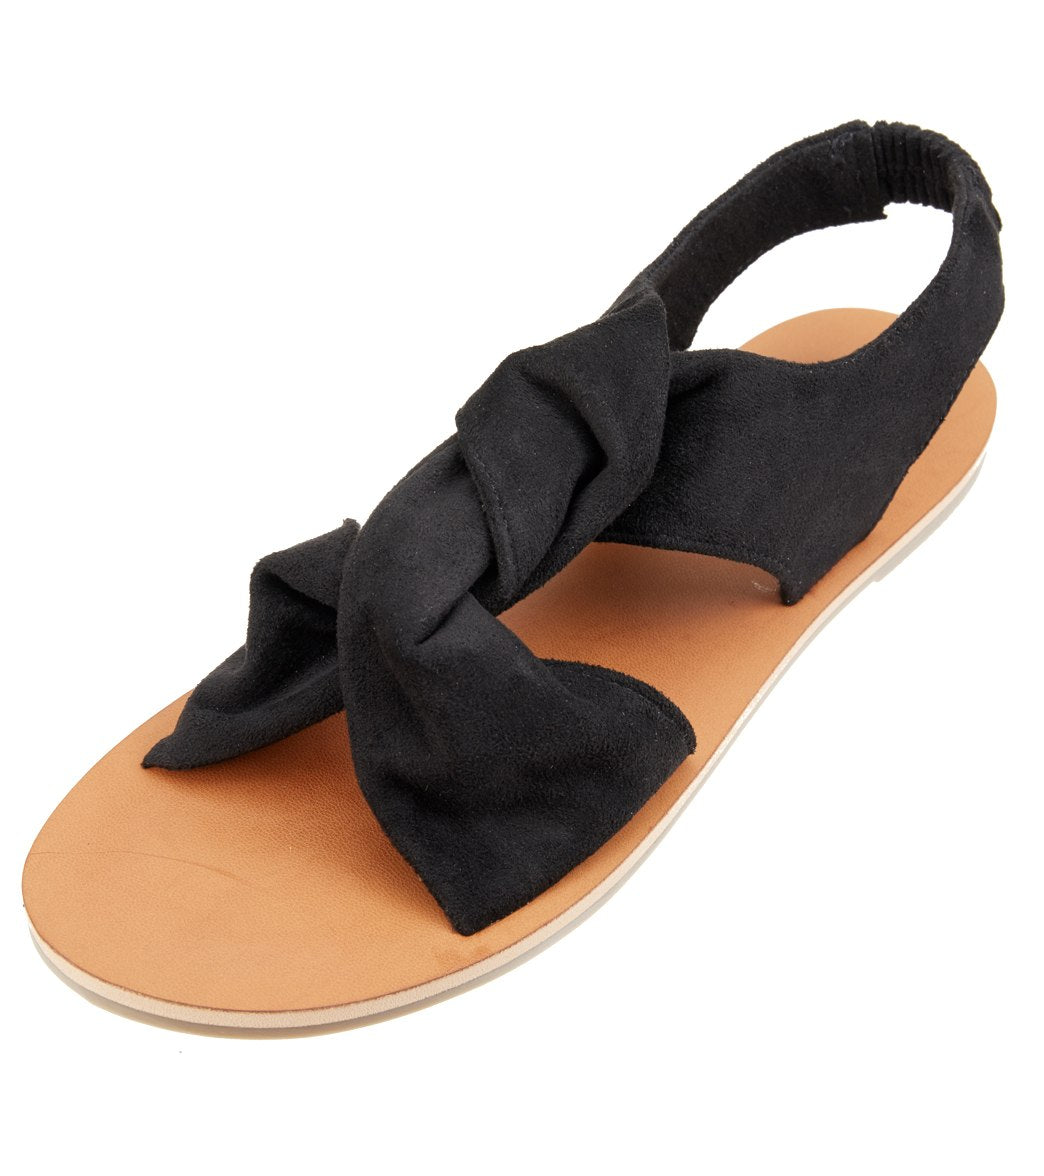 Billabong women's rory sandals - off black 6 - swimoutlet.com